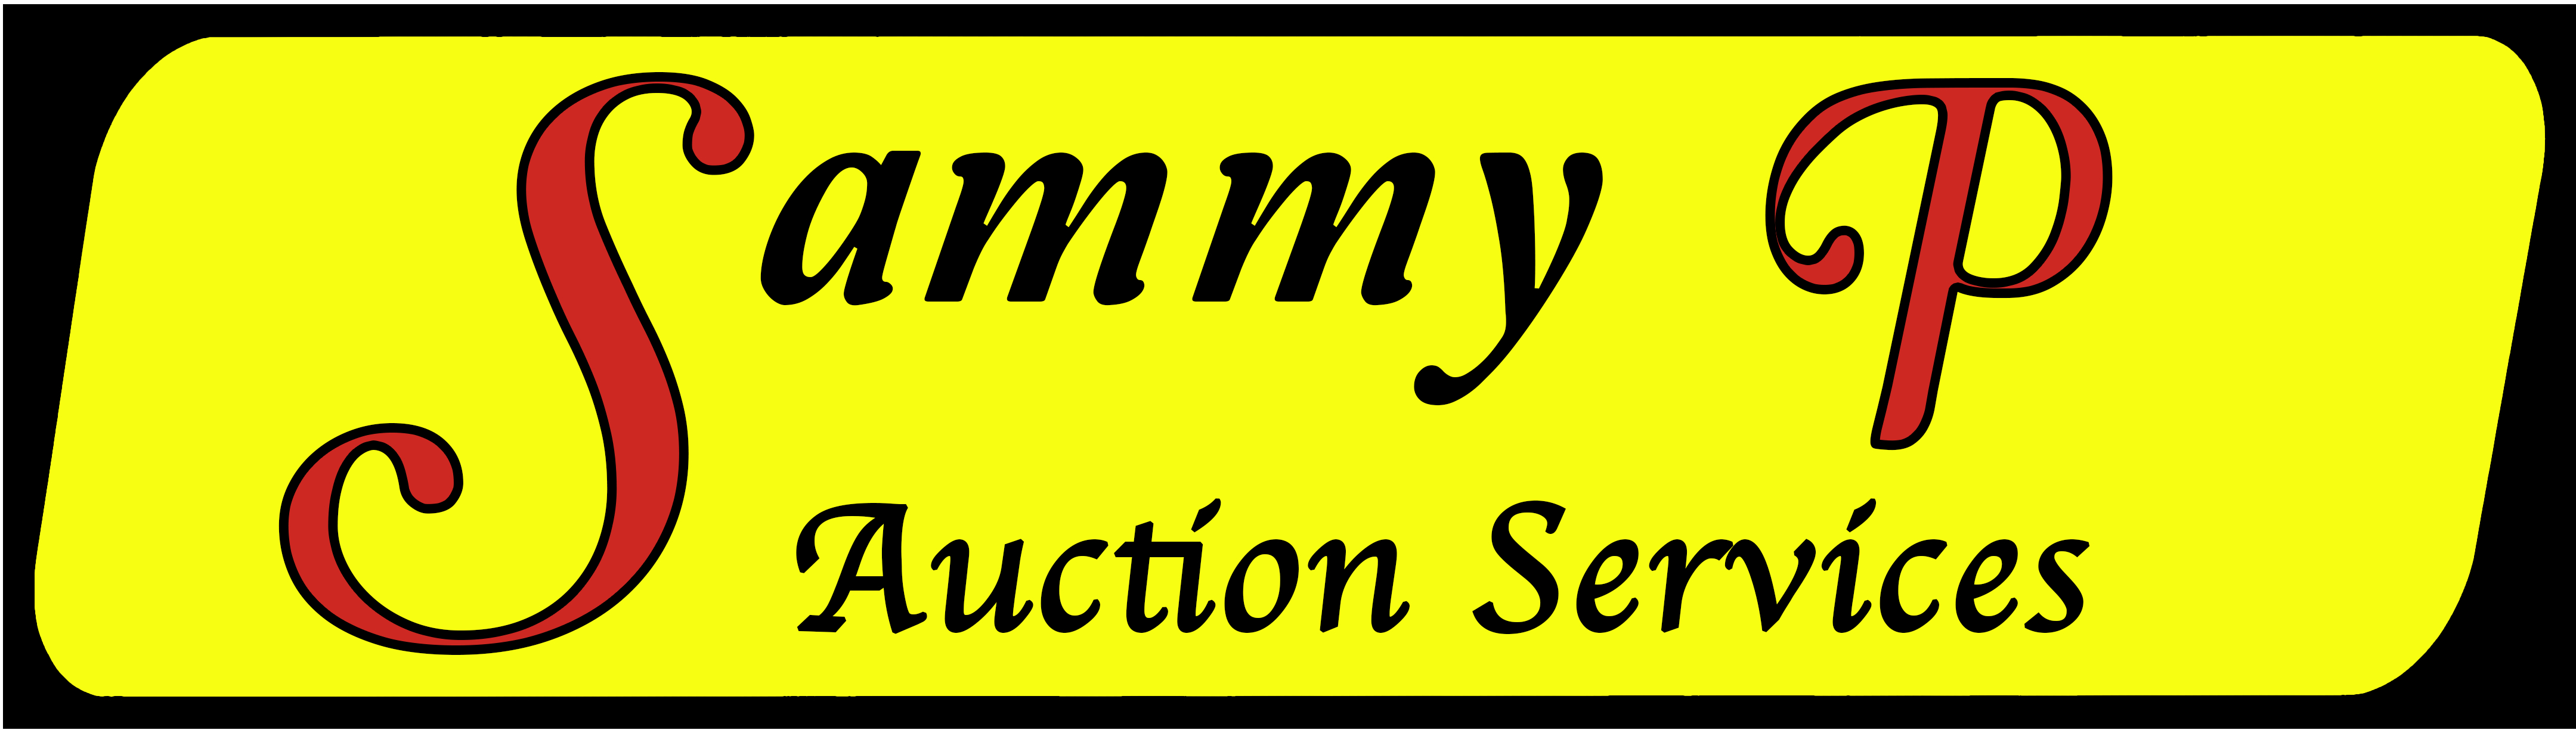 Sammy P Auction Services company logo